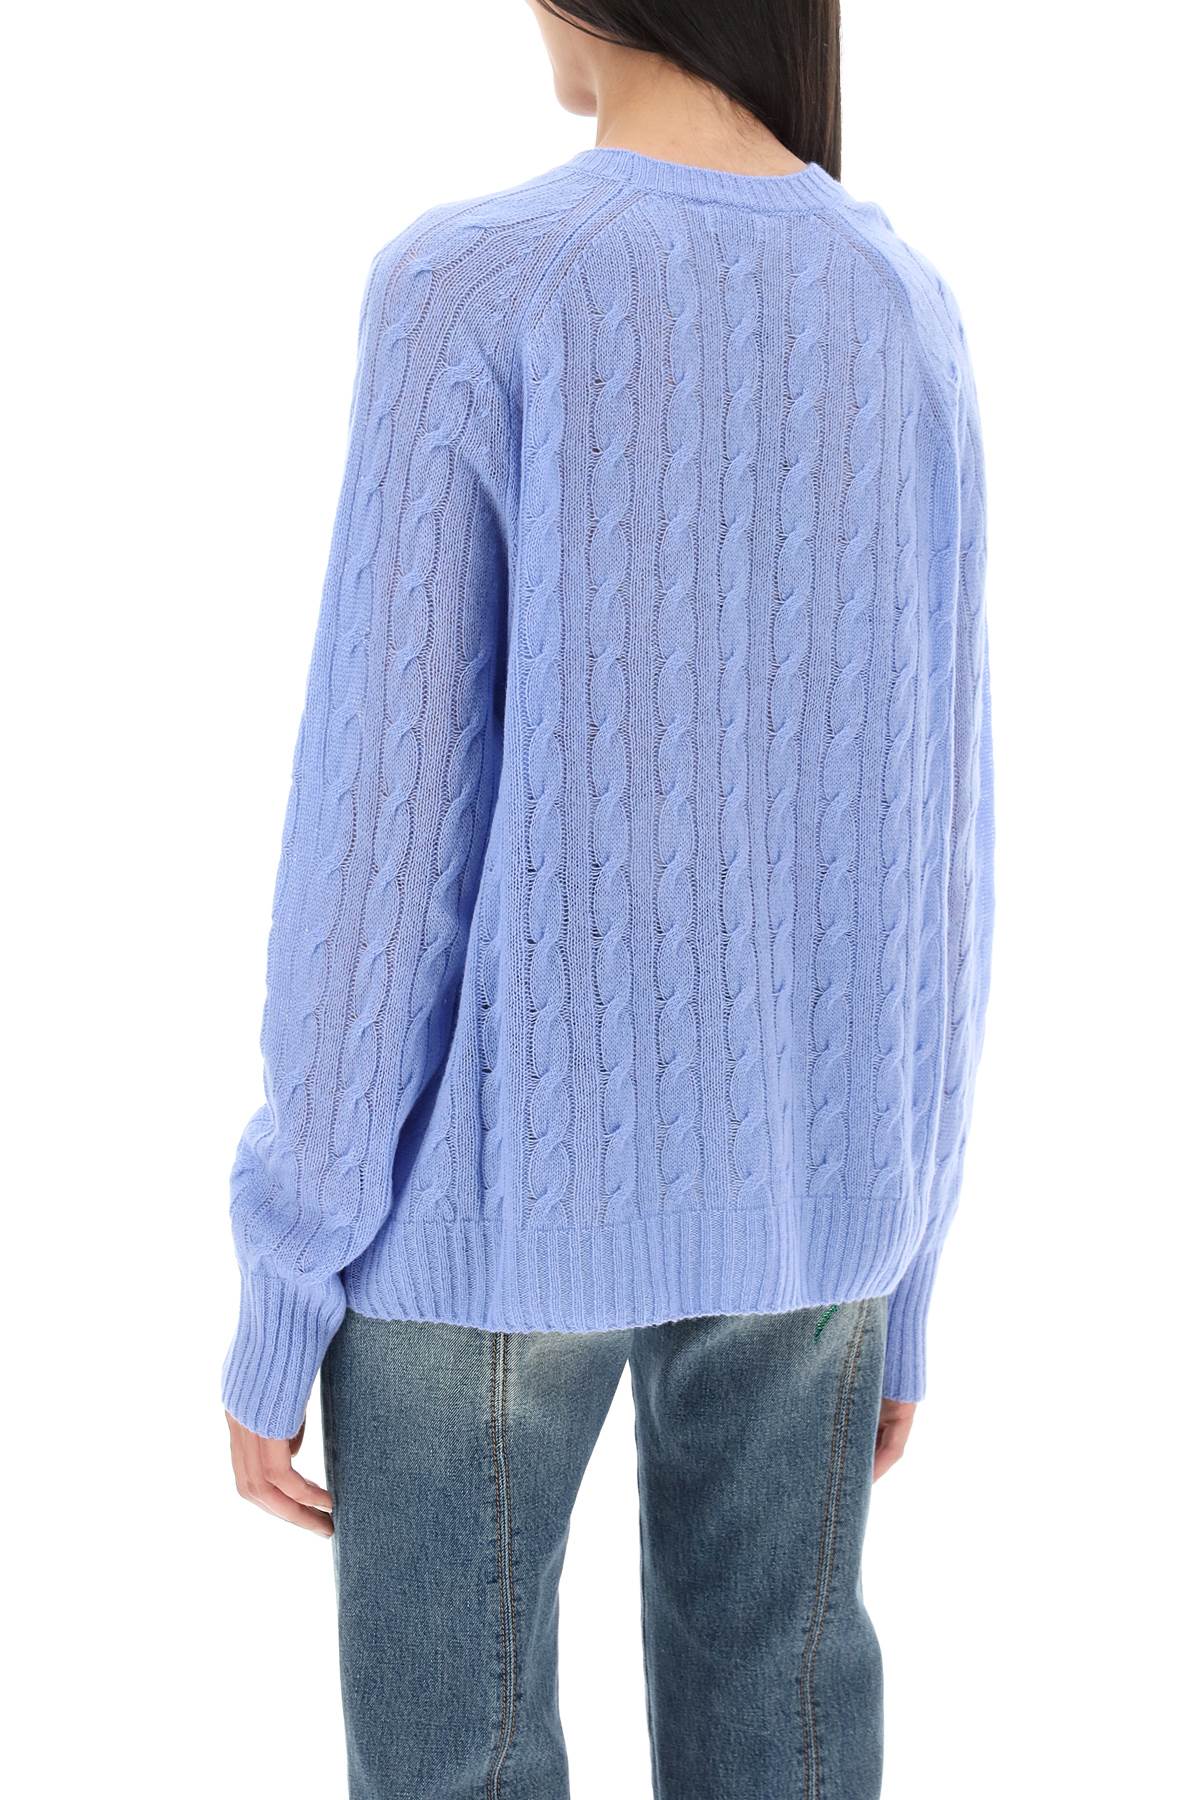 ETRO Unique Pegasus Embroidered Cashmere Sweater in Blue - FW23 for Women